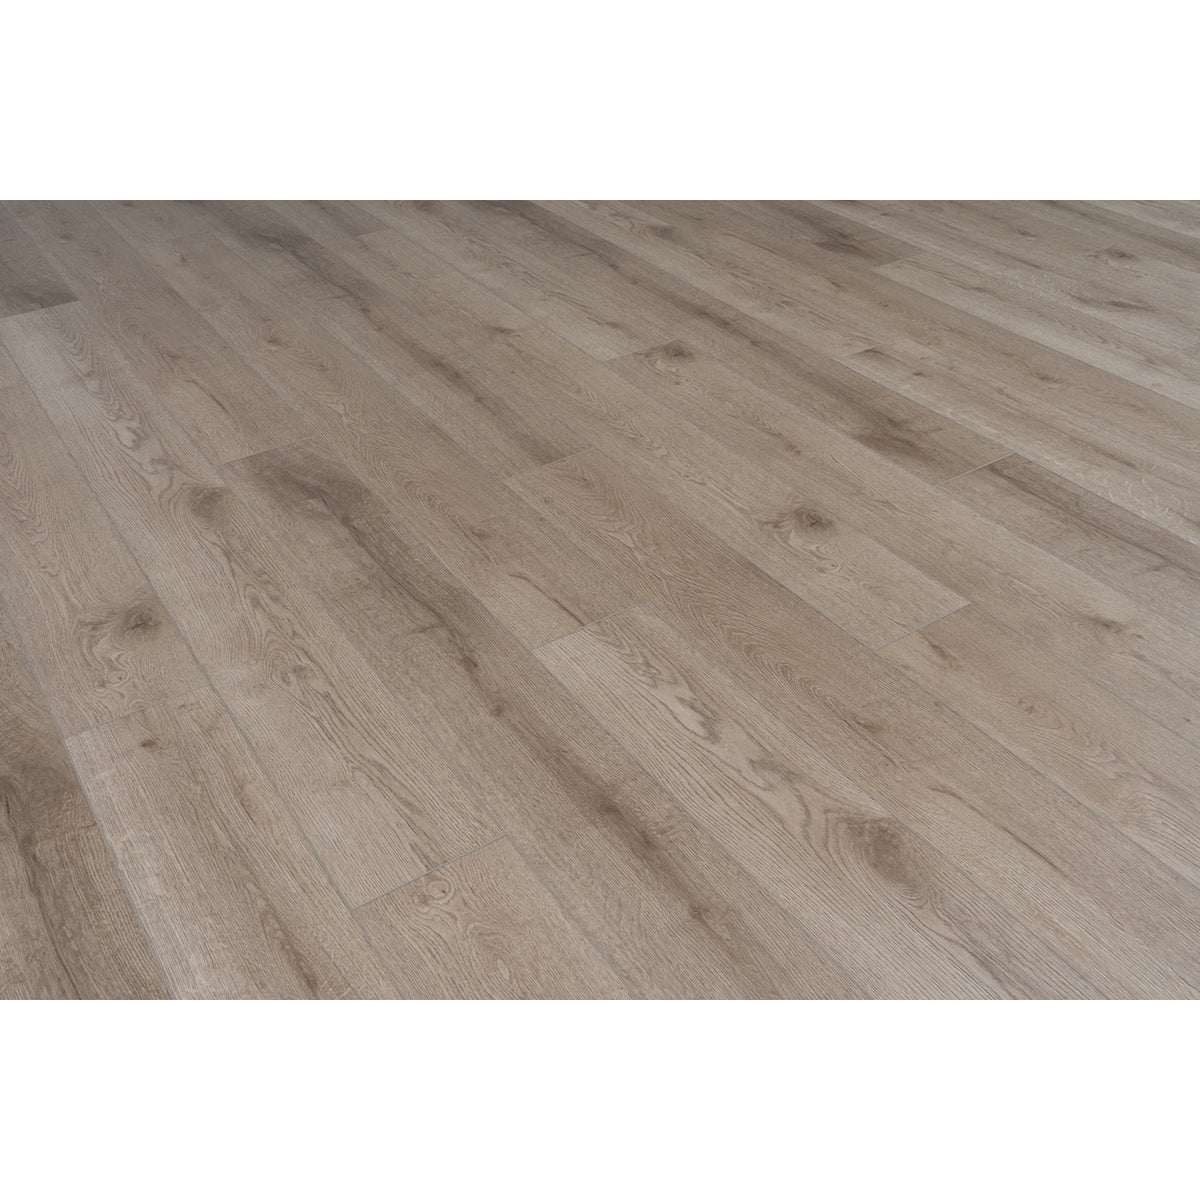 Provenza Floors - Concorde Oak Luxury Vinyl Plank - London Fog